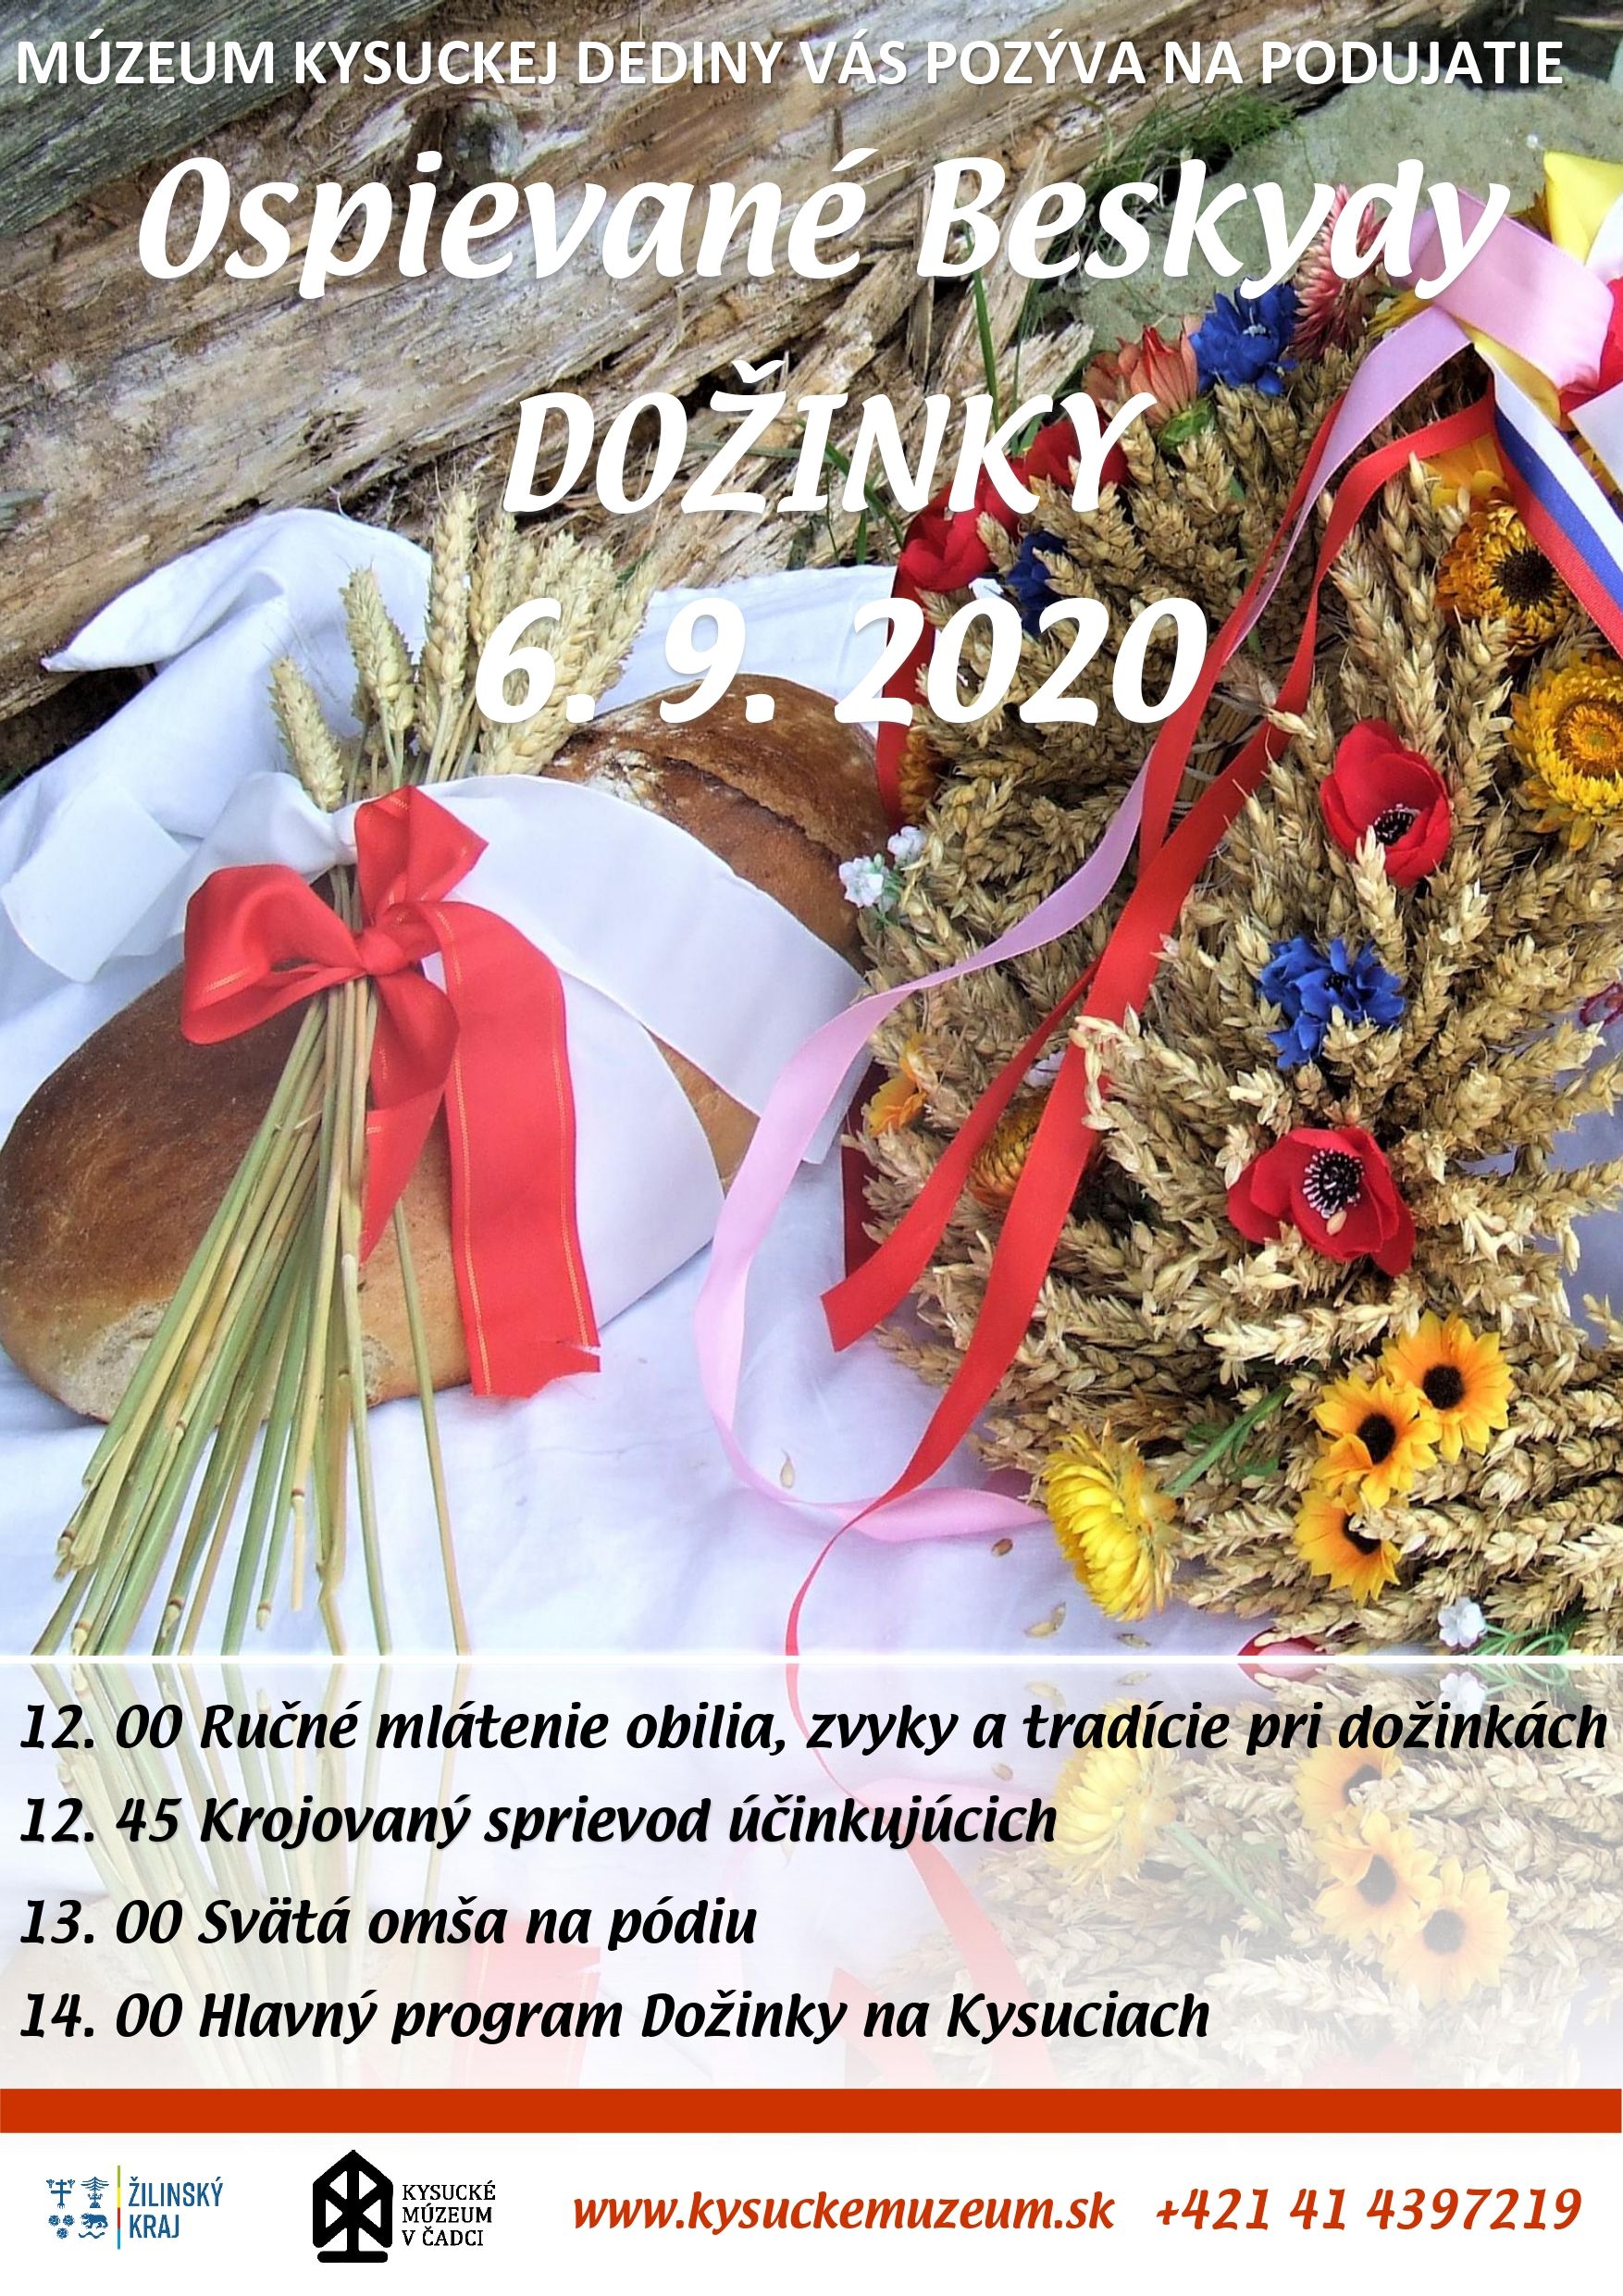 NOV - - - Ospievan Beskydy - Doinky 2020 - Vychylovka